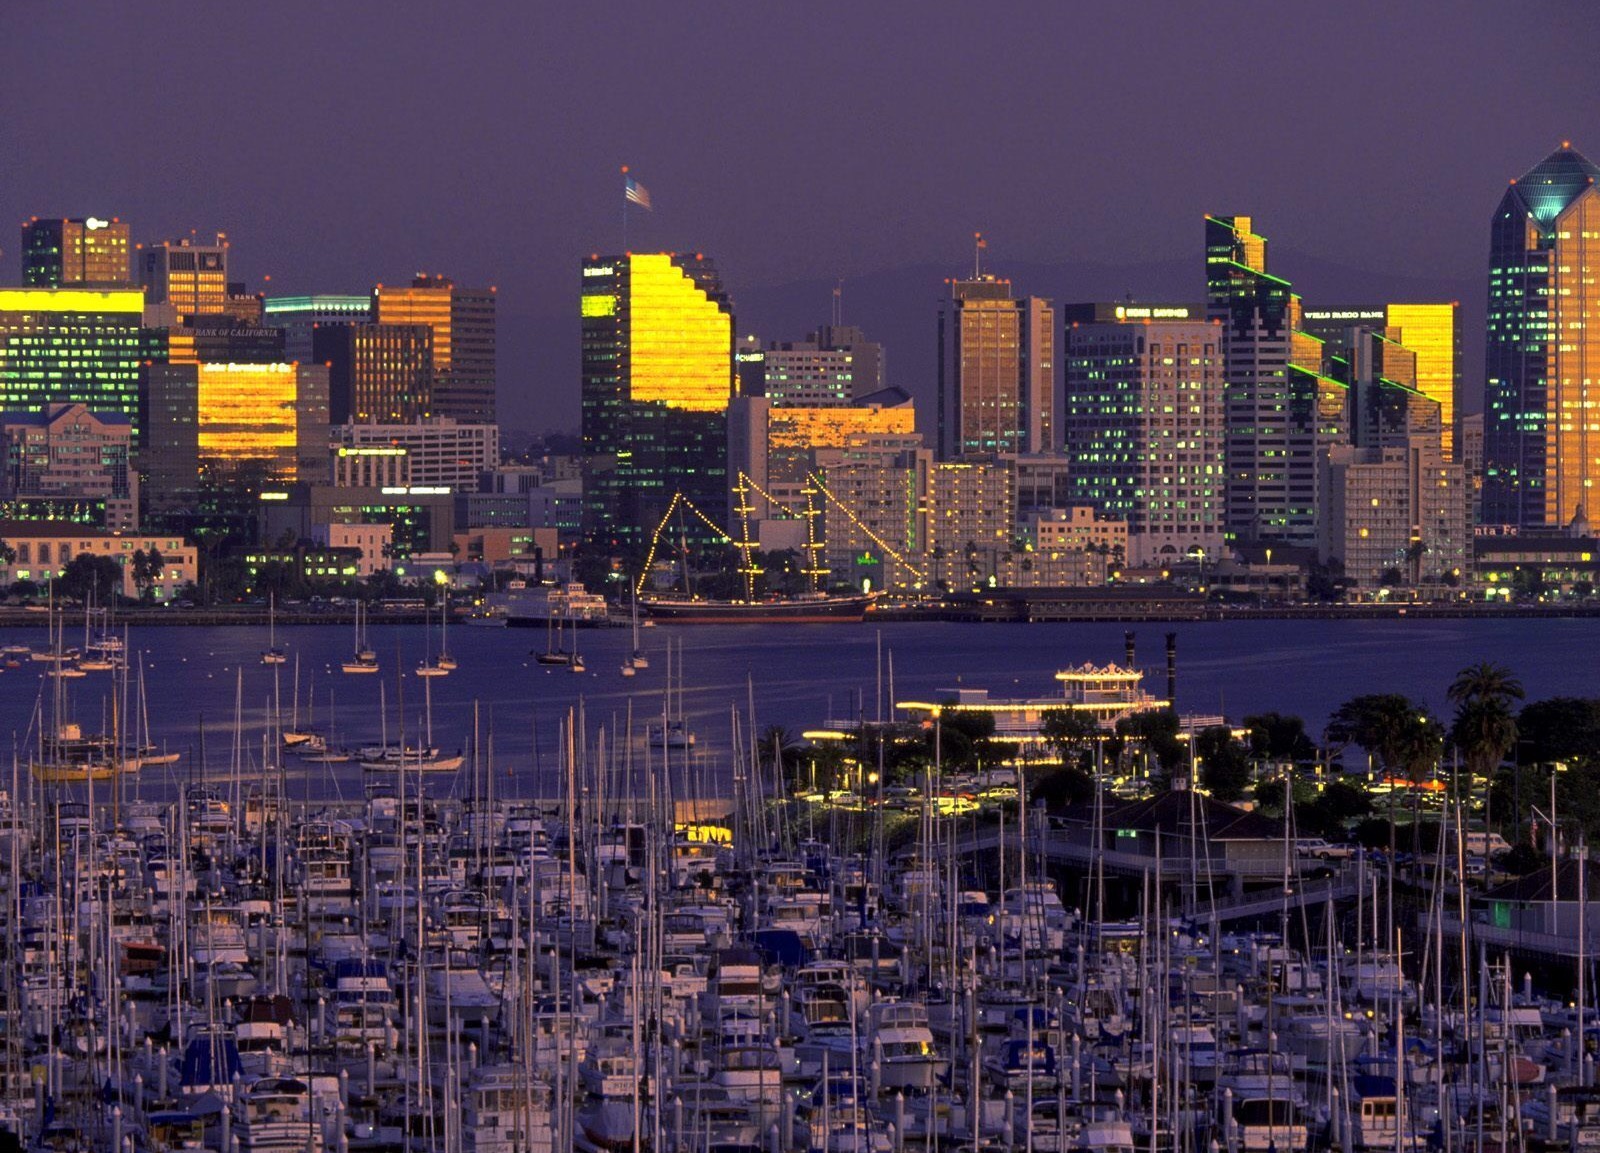 City Of San Diego